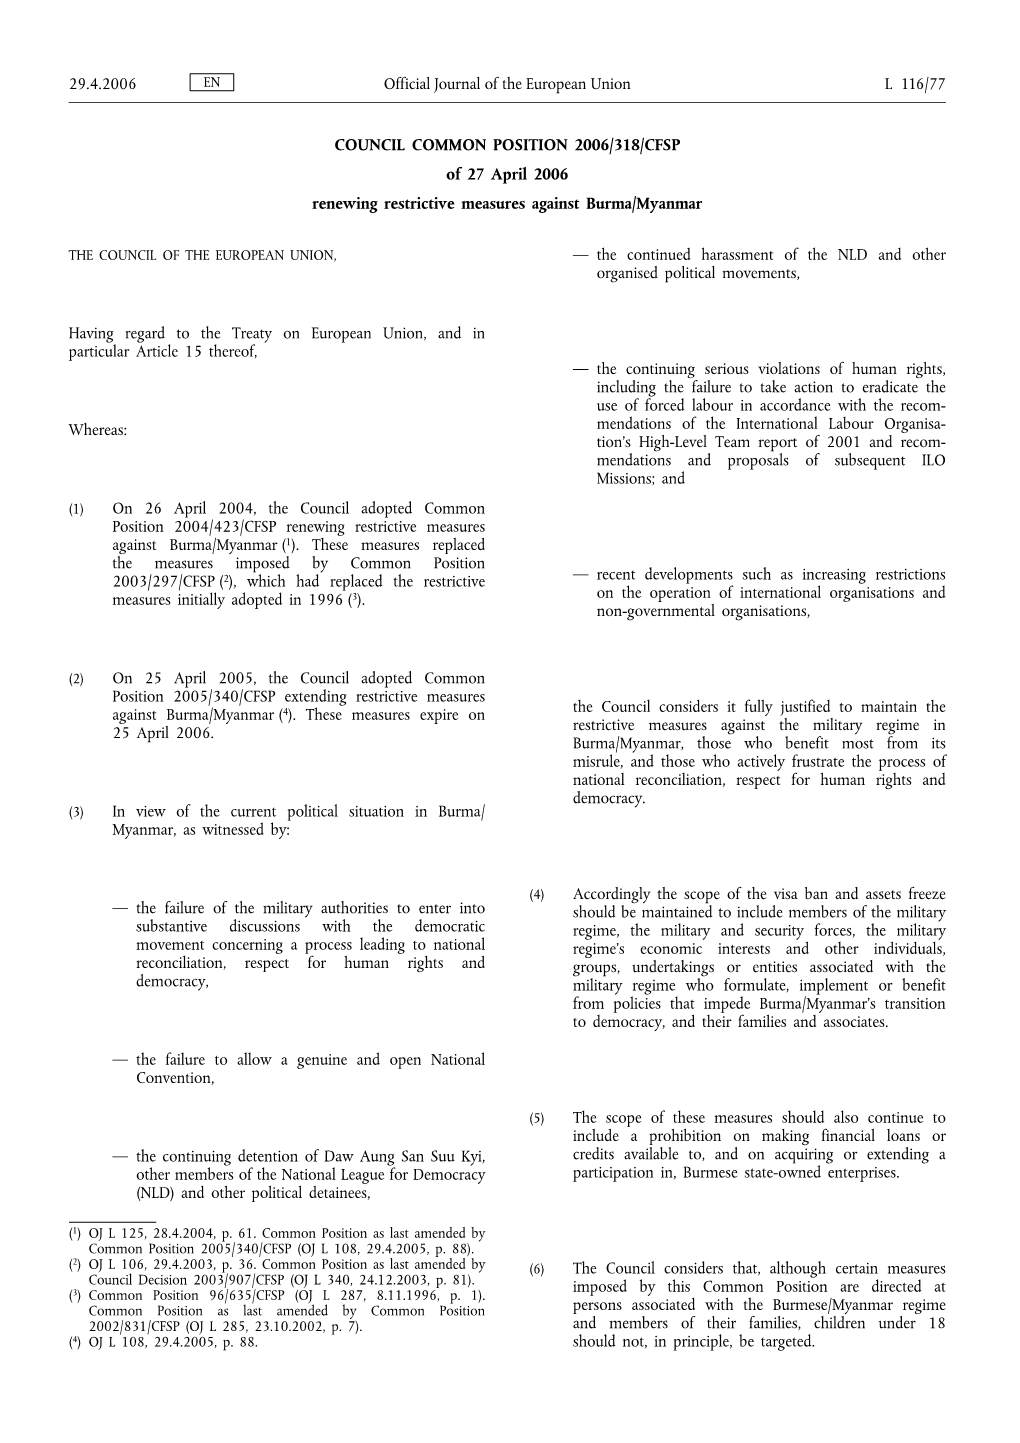 COUNCIL COMMON POSITION 2006/318/CFSP of 27 April 2006 Renewing Restrictive Measures Against Burma/Myanmar Having Regard To